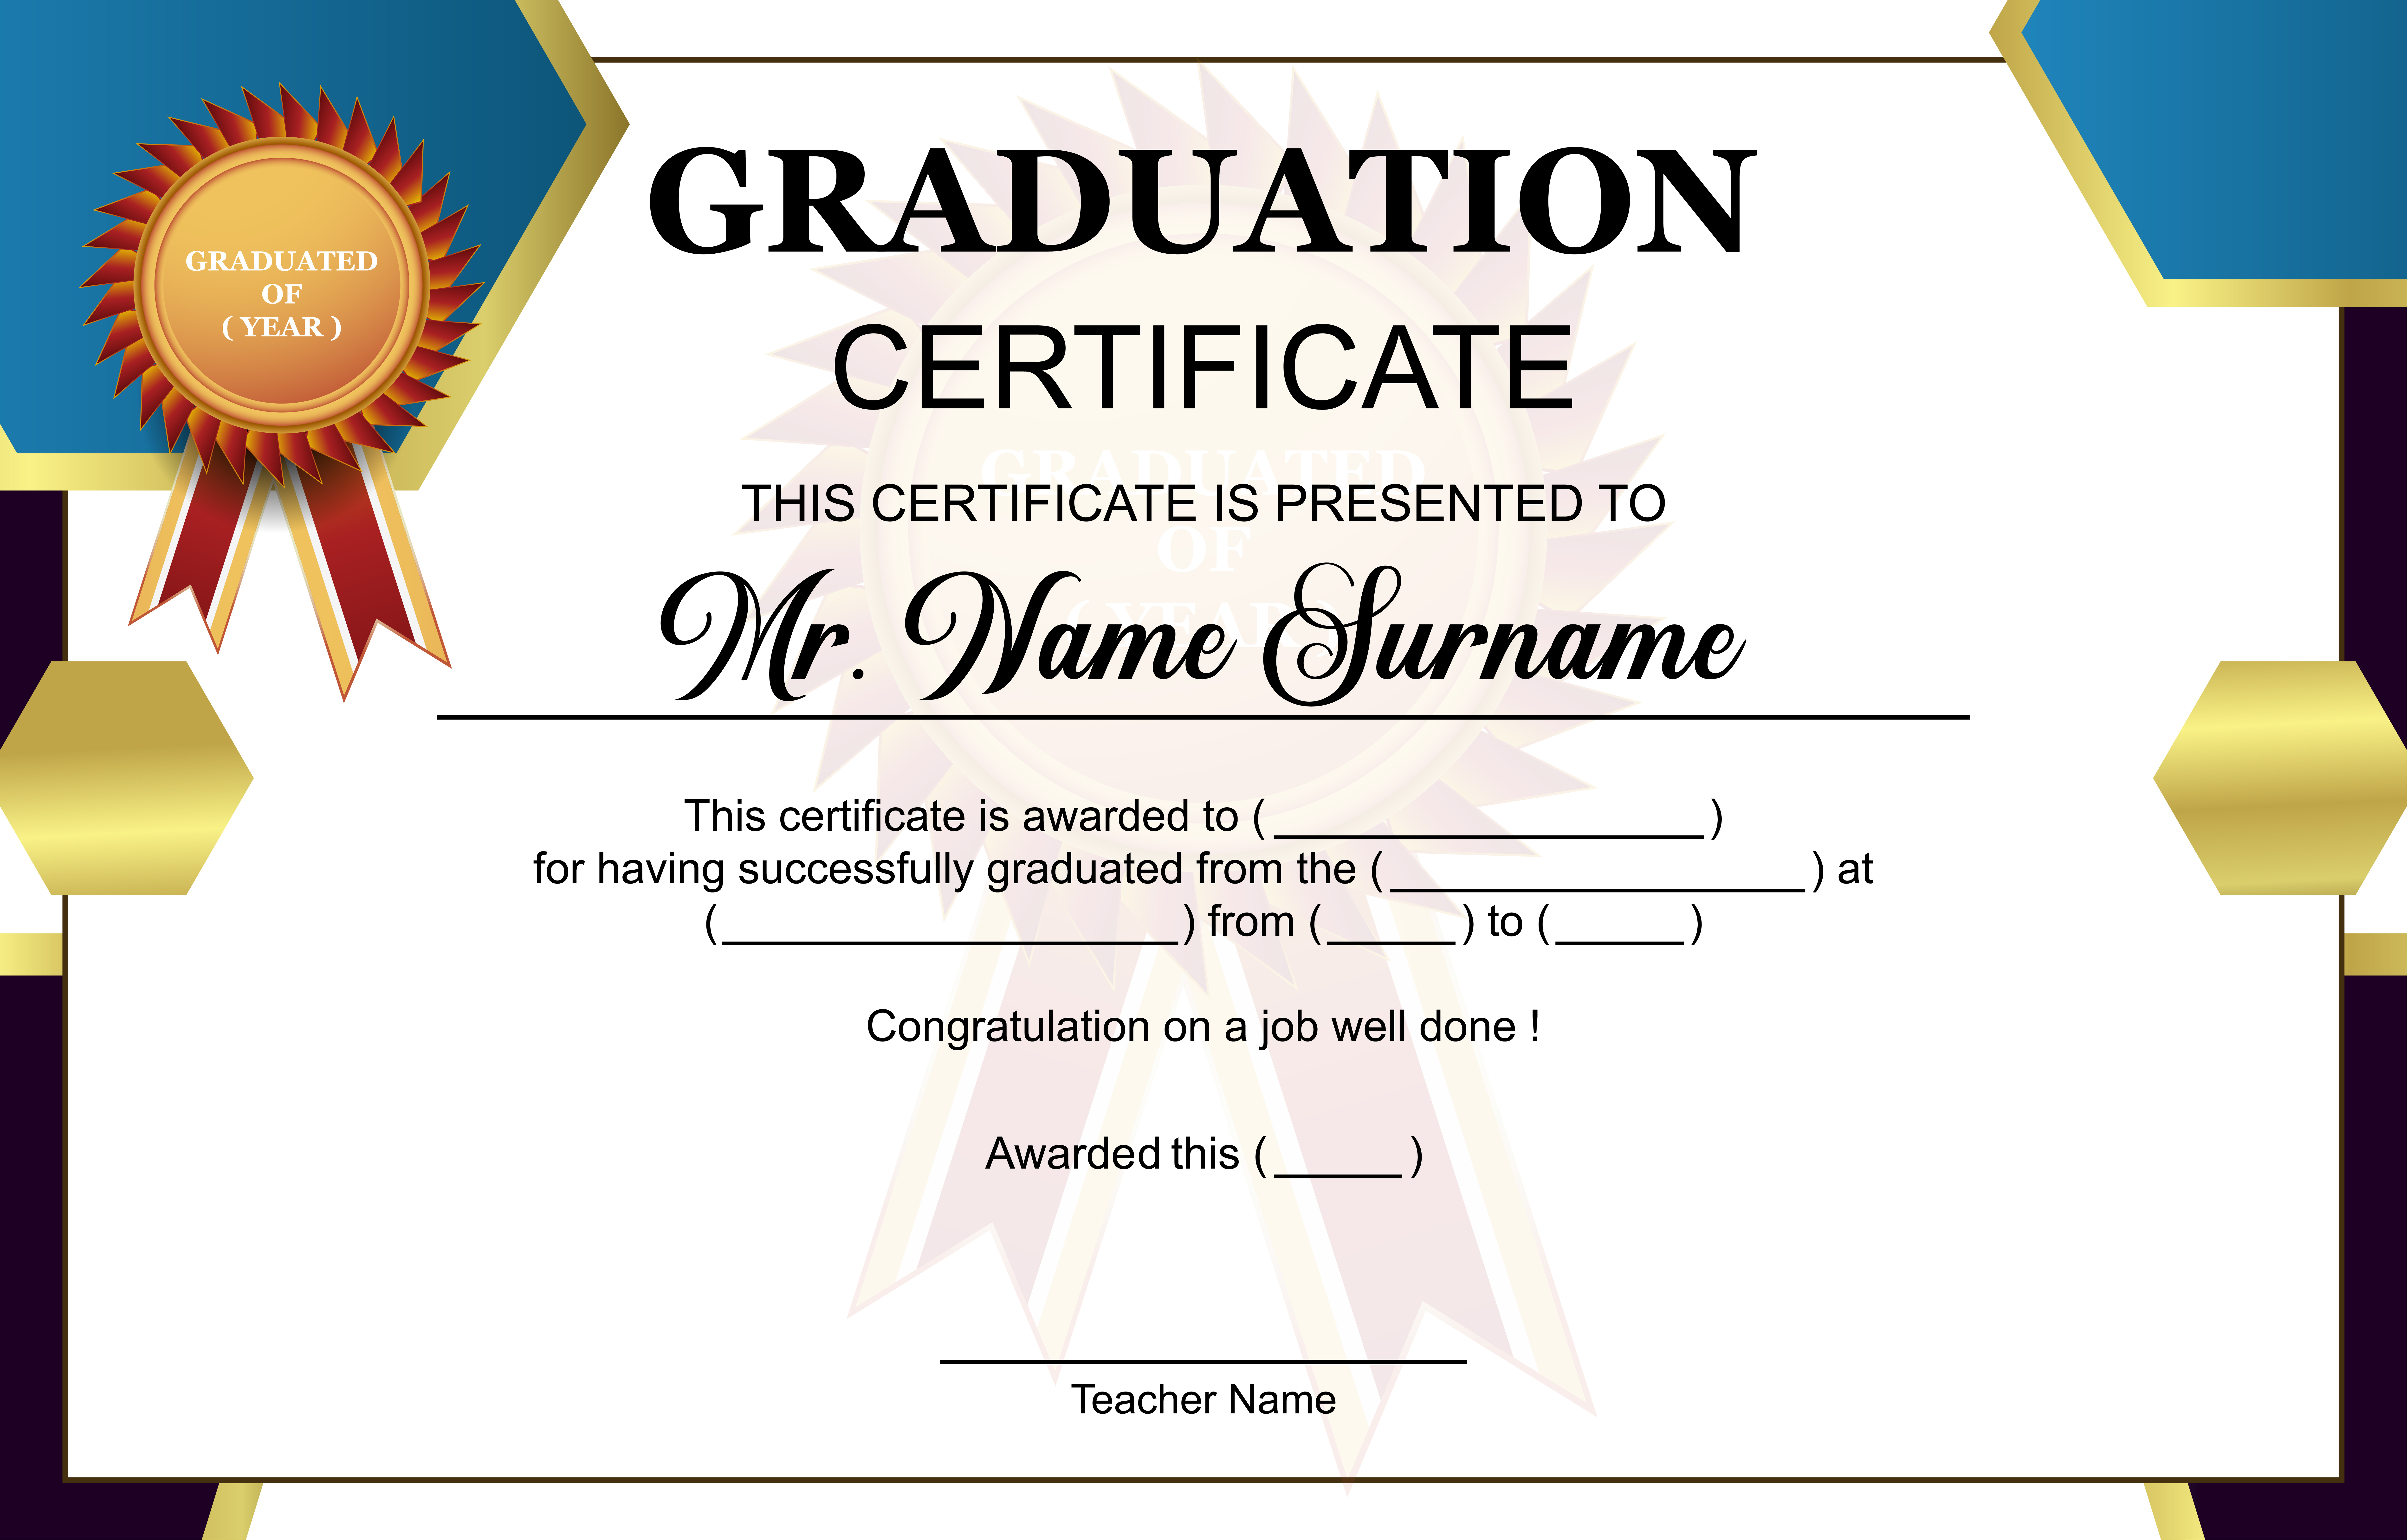 Graduation Certificate Template 10 Vector Art At Vecteezy With University Graduation Certificate Template